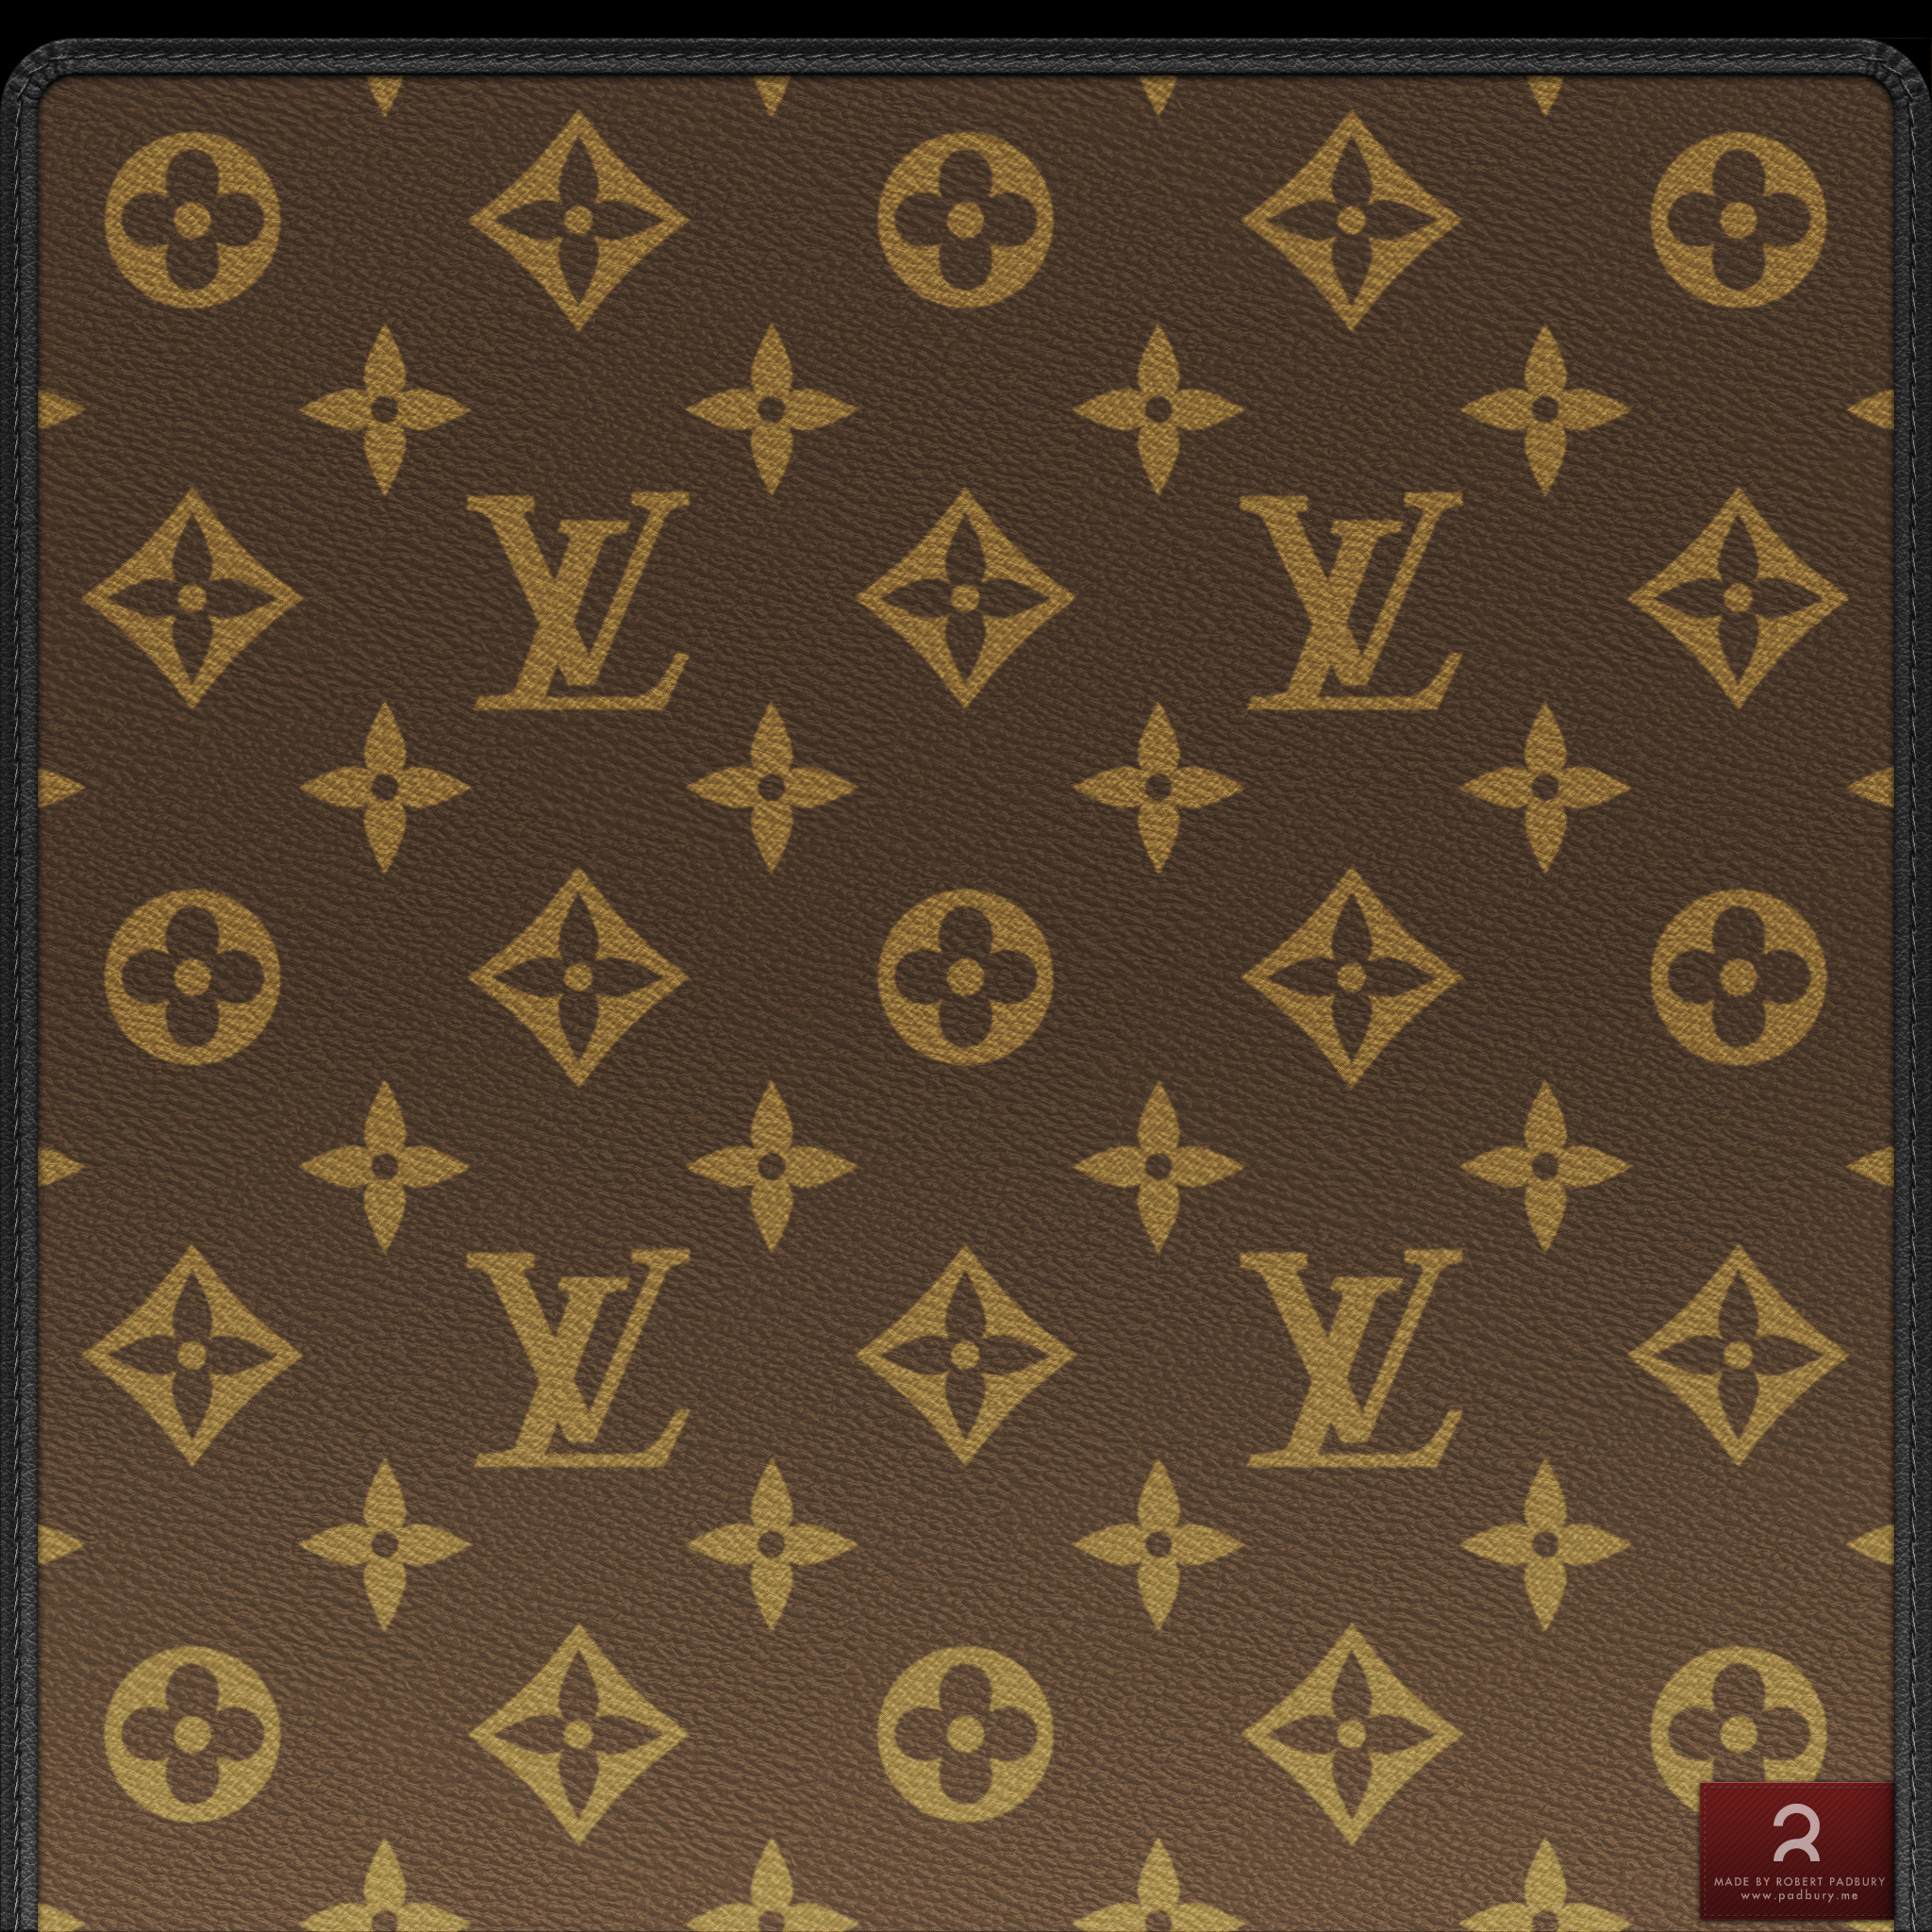 46+] Louis Vuitton Damier Wallpaper